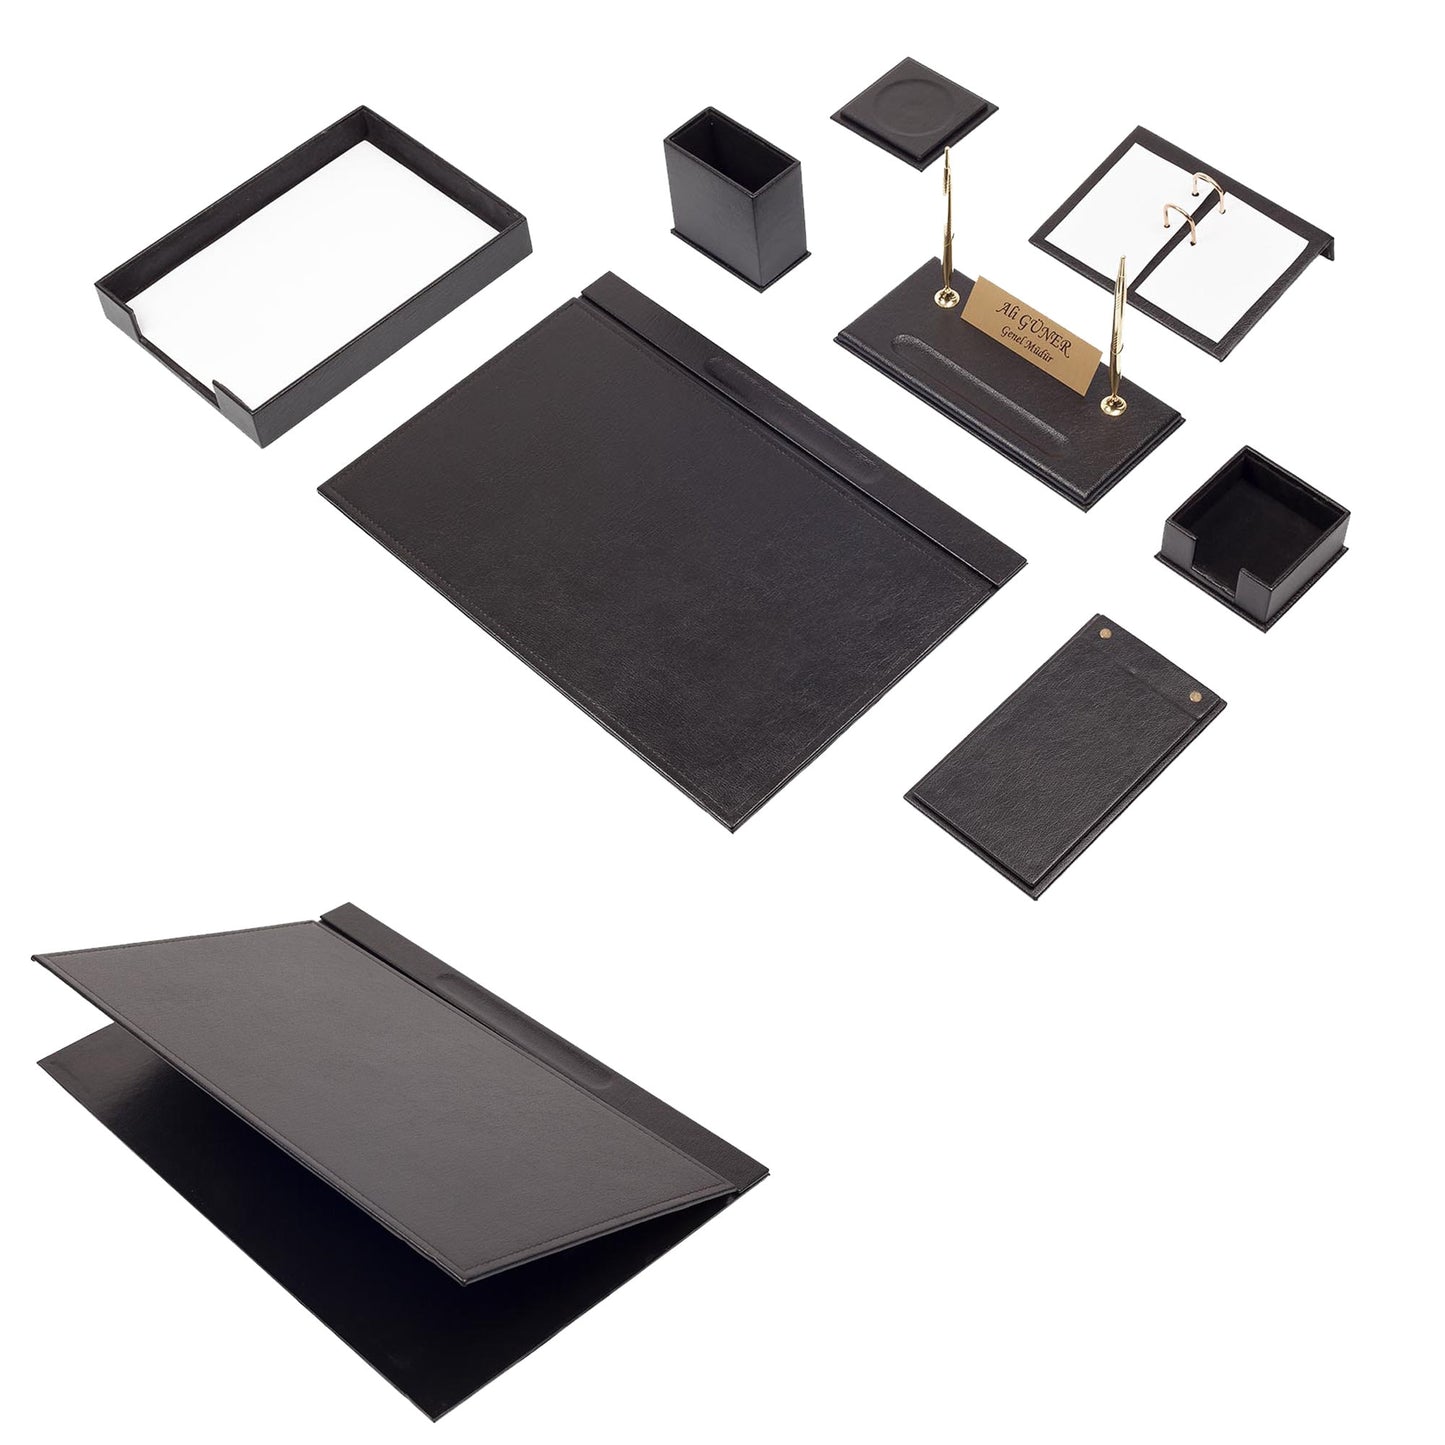 Personalized Desk Mat, Leather desk set, 3rd anniversary gift, gift for desk set